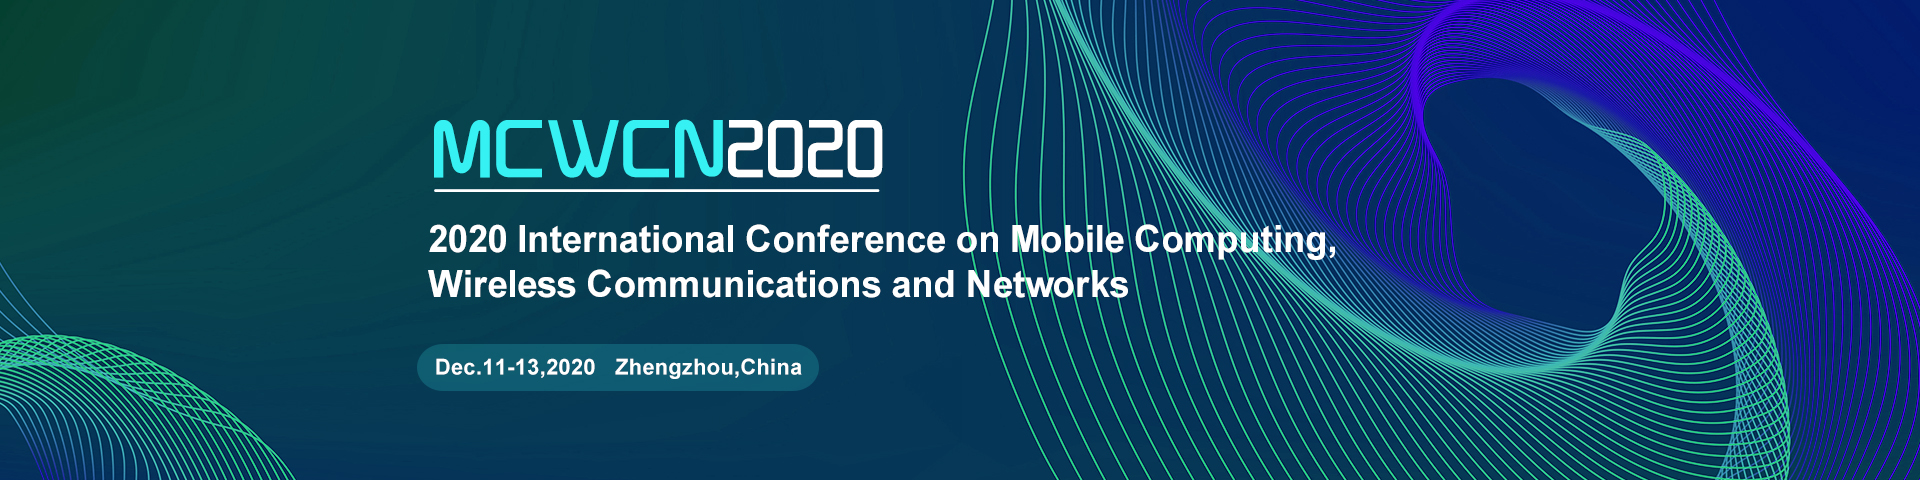 2020 International Conference on Mobile, Wireless Communications and Networks (MCWCN2020), Zhengzhou, Henan, China